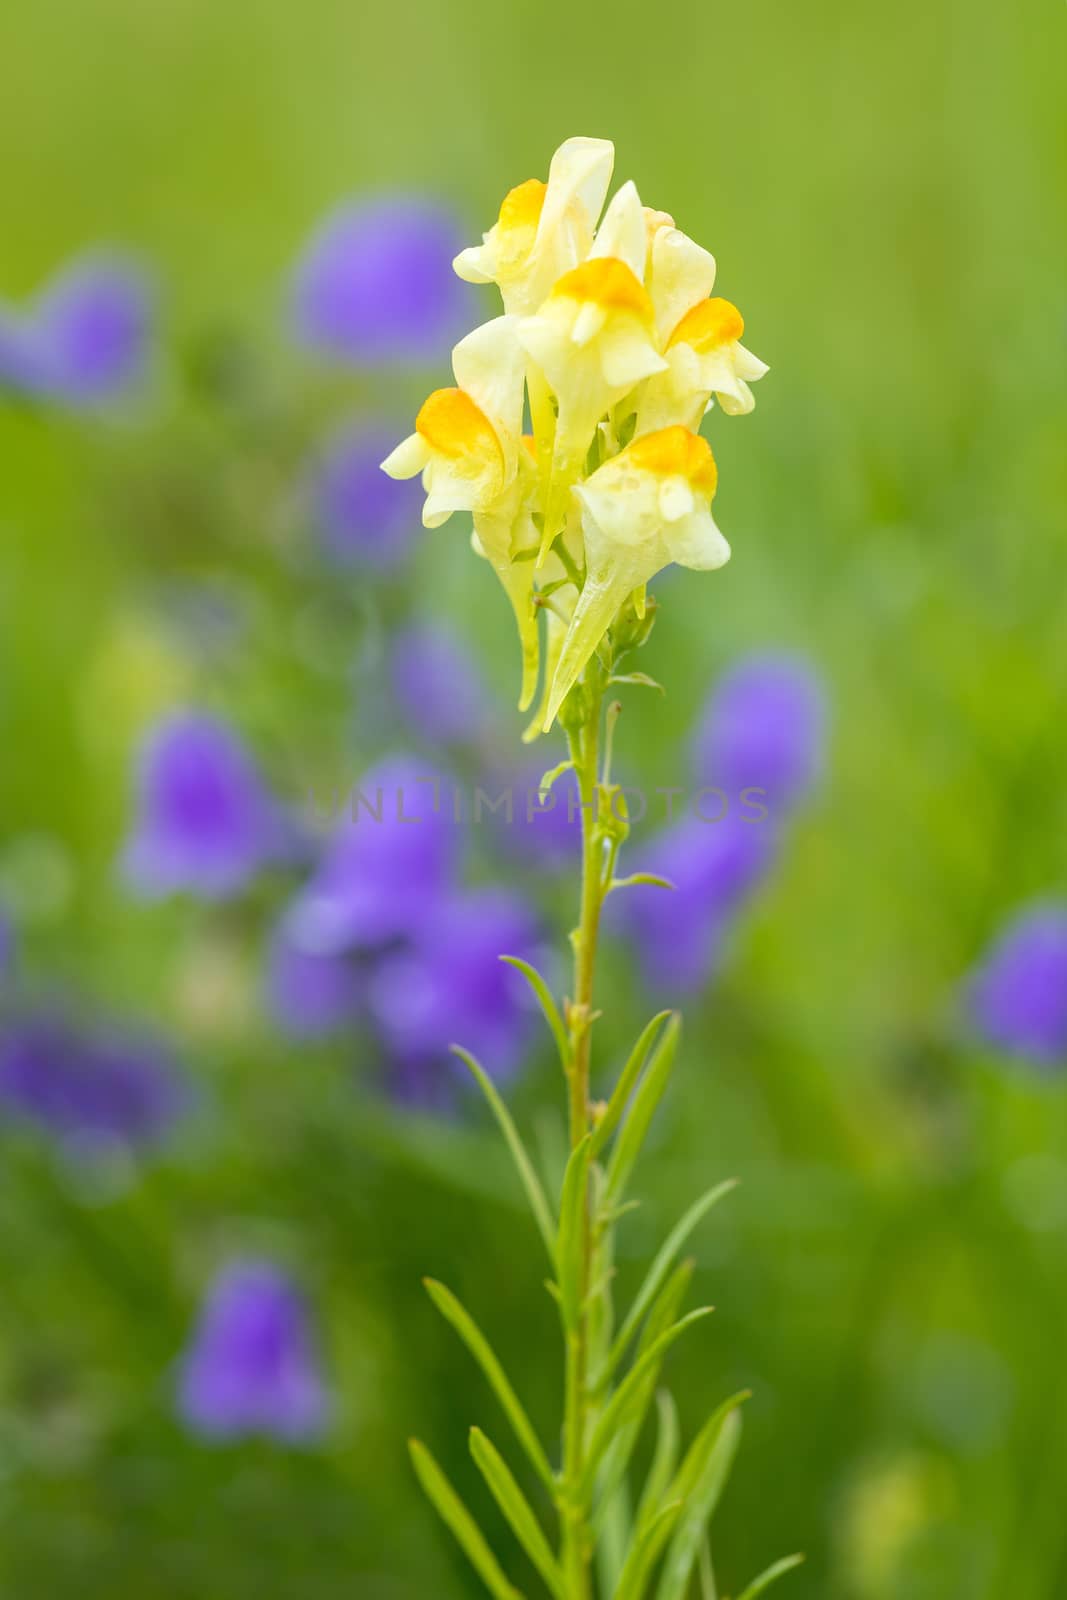 Linaria vulgaris - decorative pale yellow flower by artush